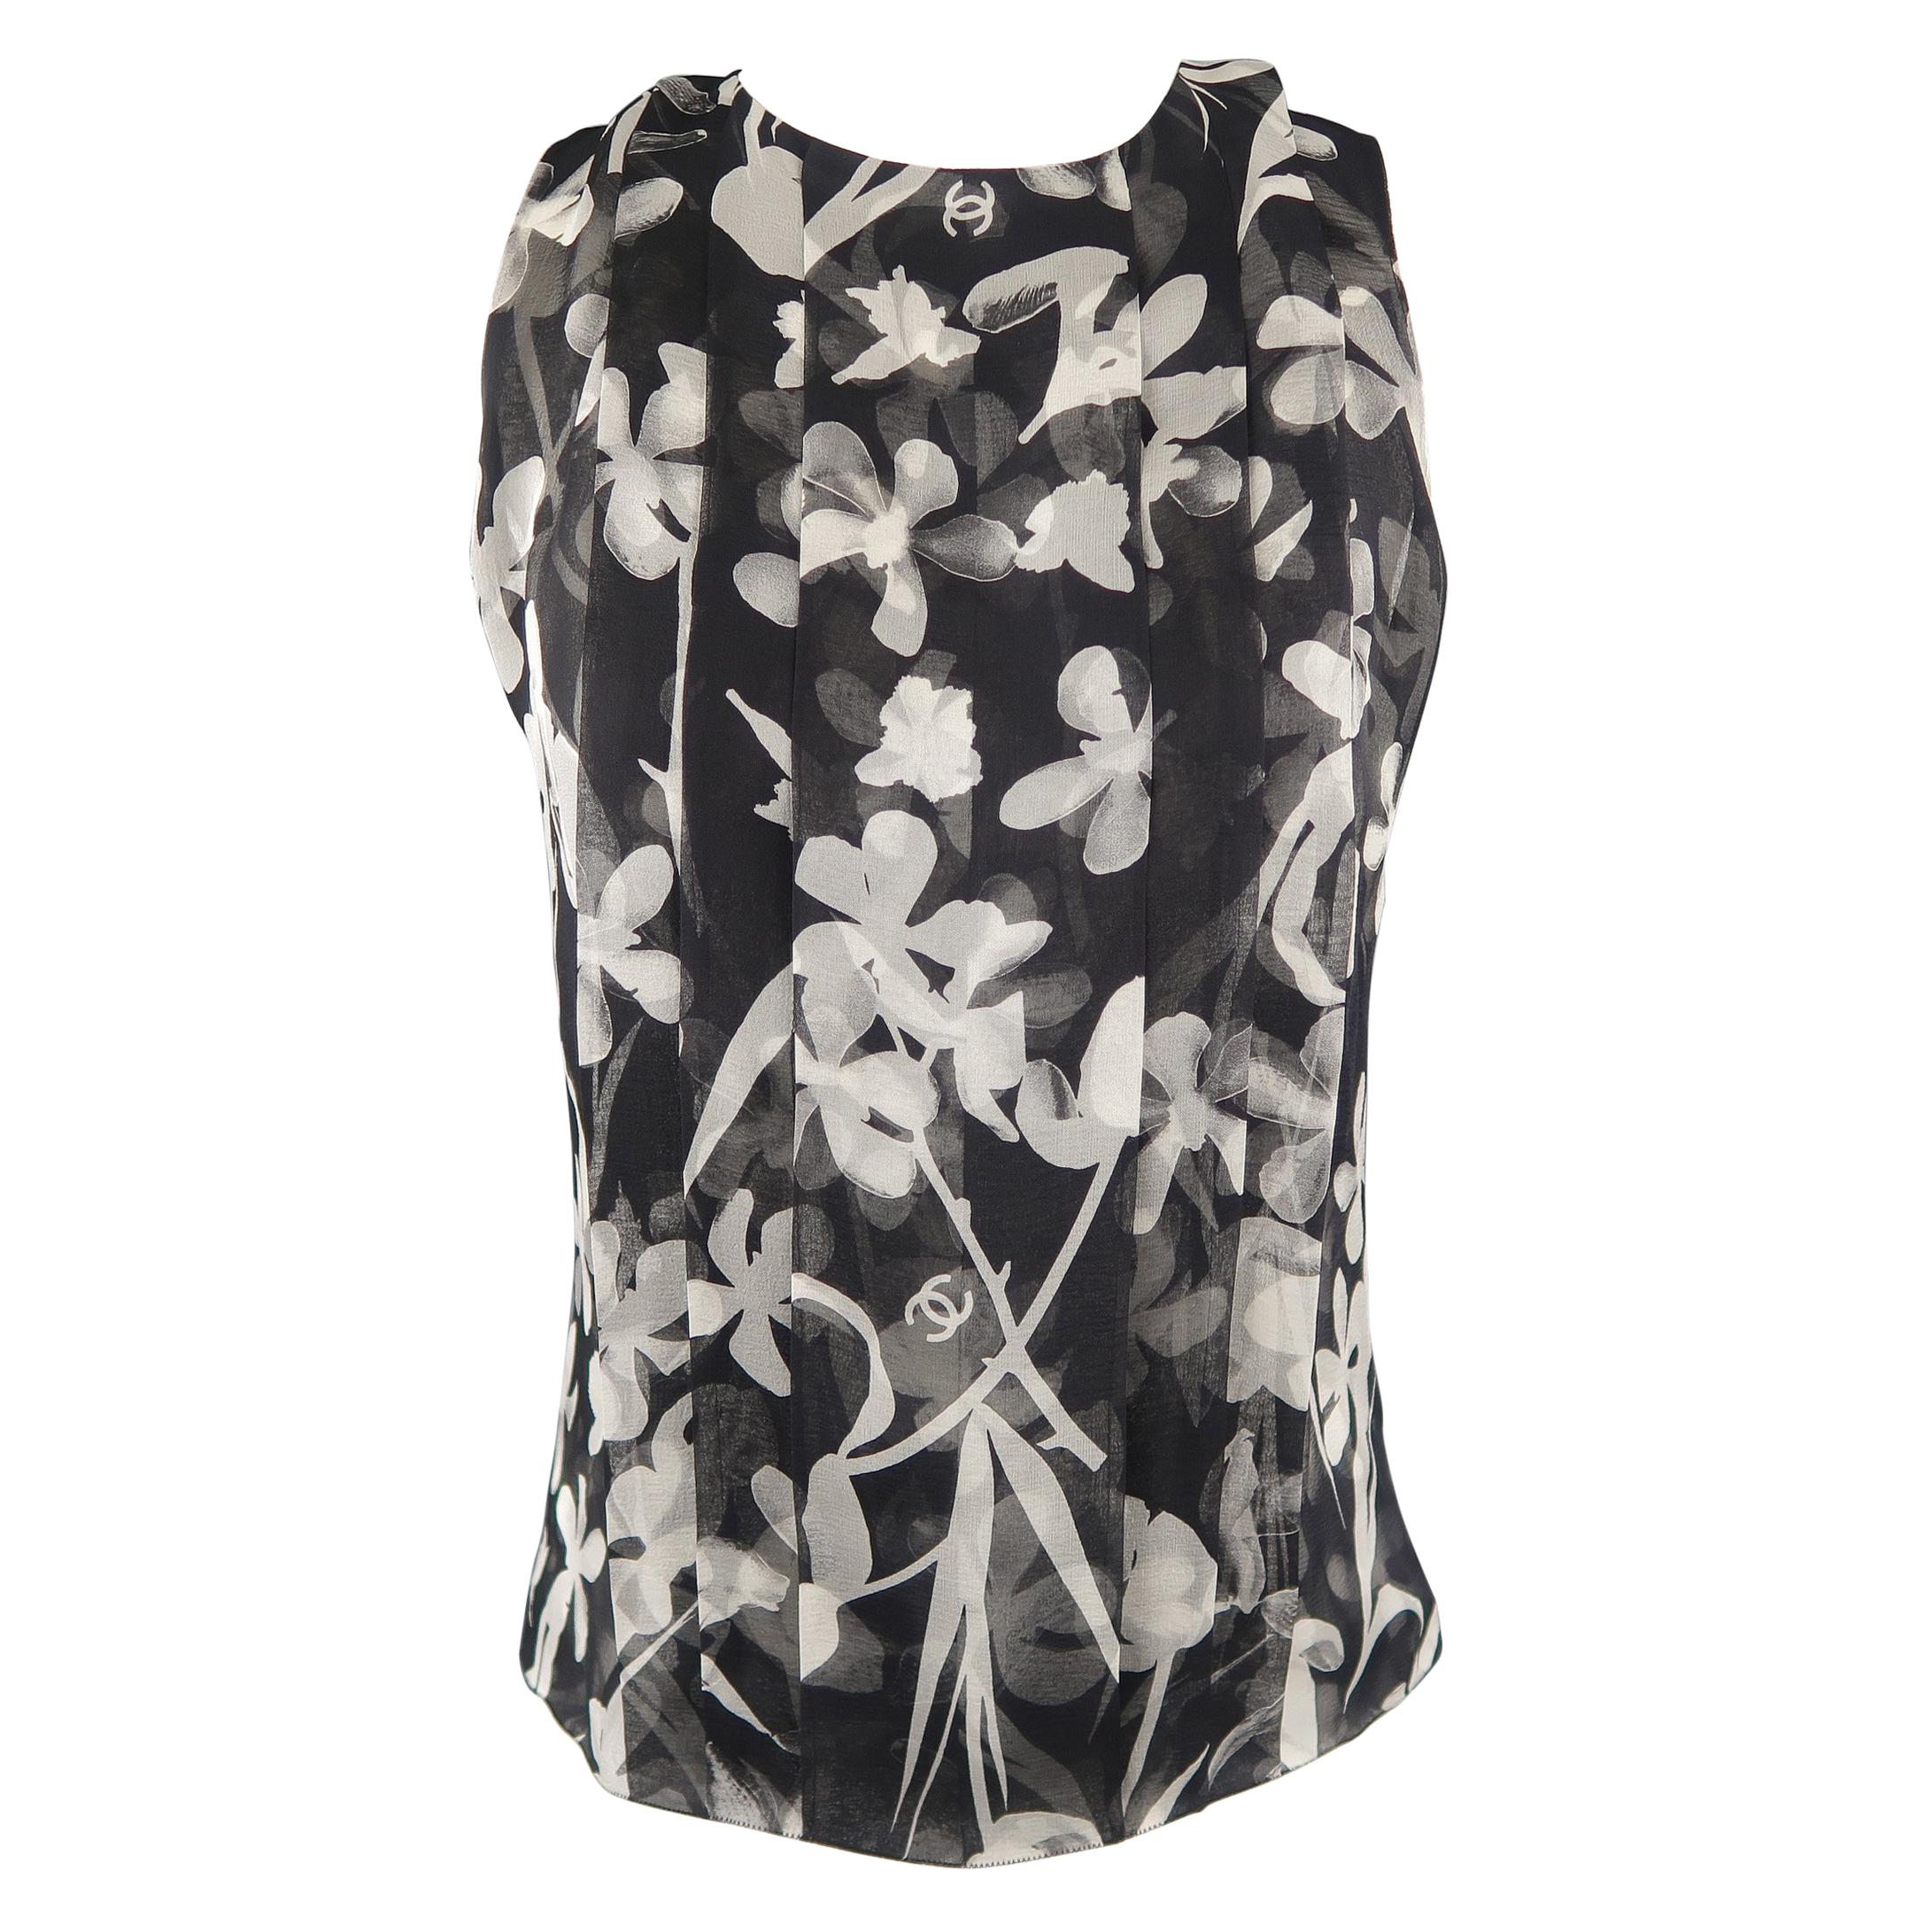 CHANEL Size M Black & White Floral CC Pleated Silk Chiffon Sleeveless Blouse